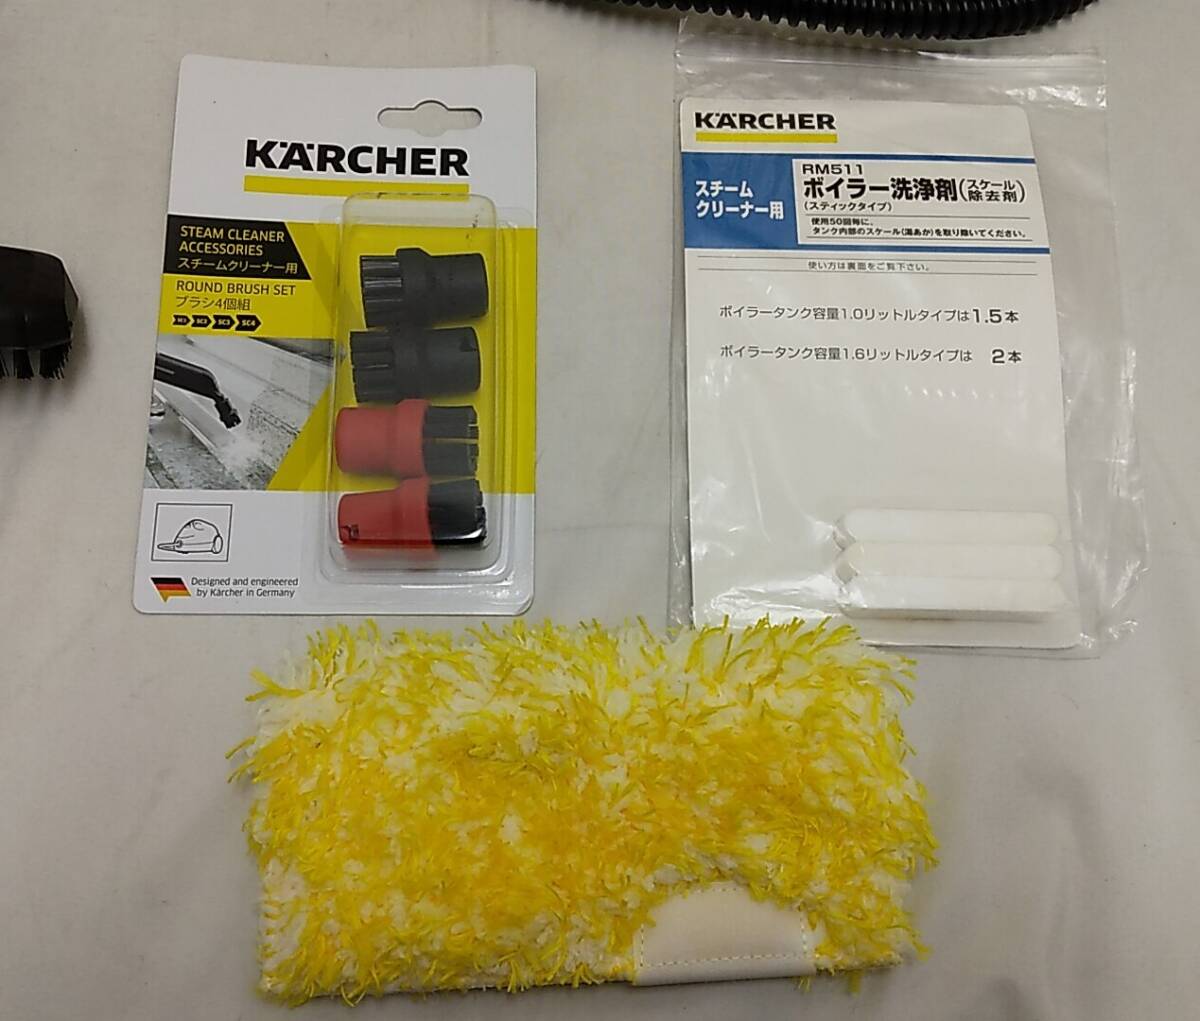 ** secondhand goods Karcher KARCHER SC2 steam cleaner AA676-336**